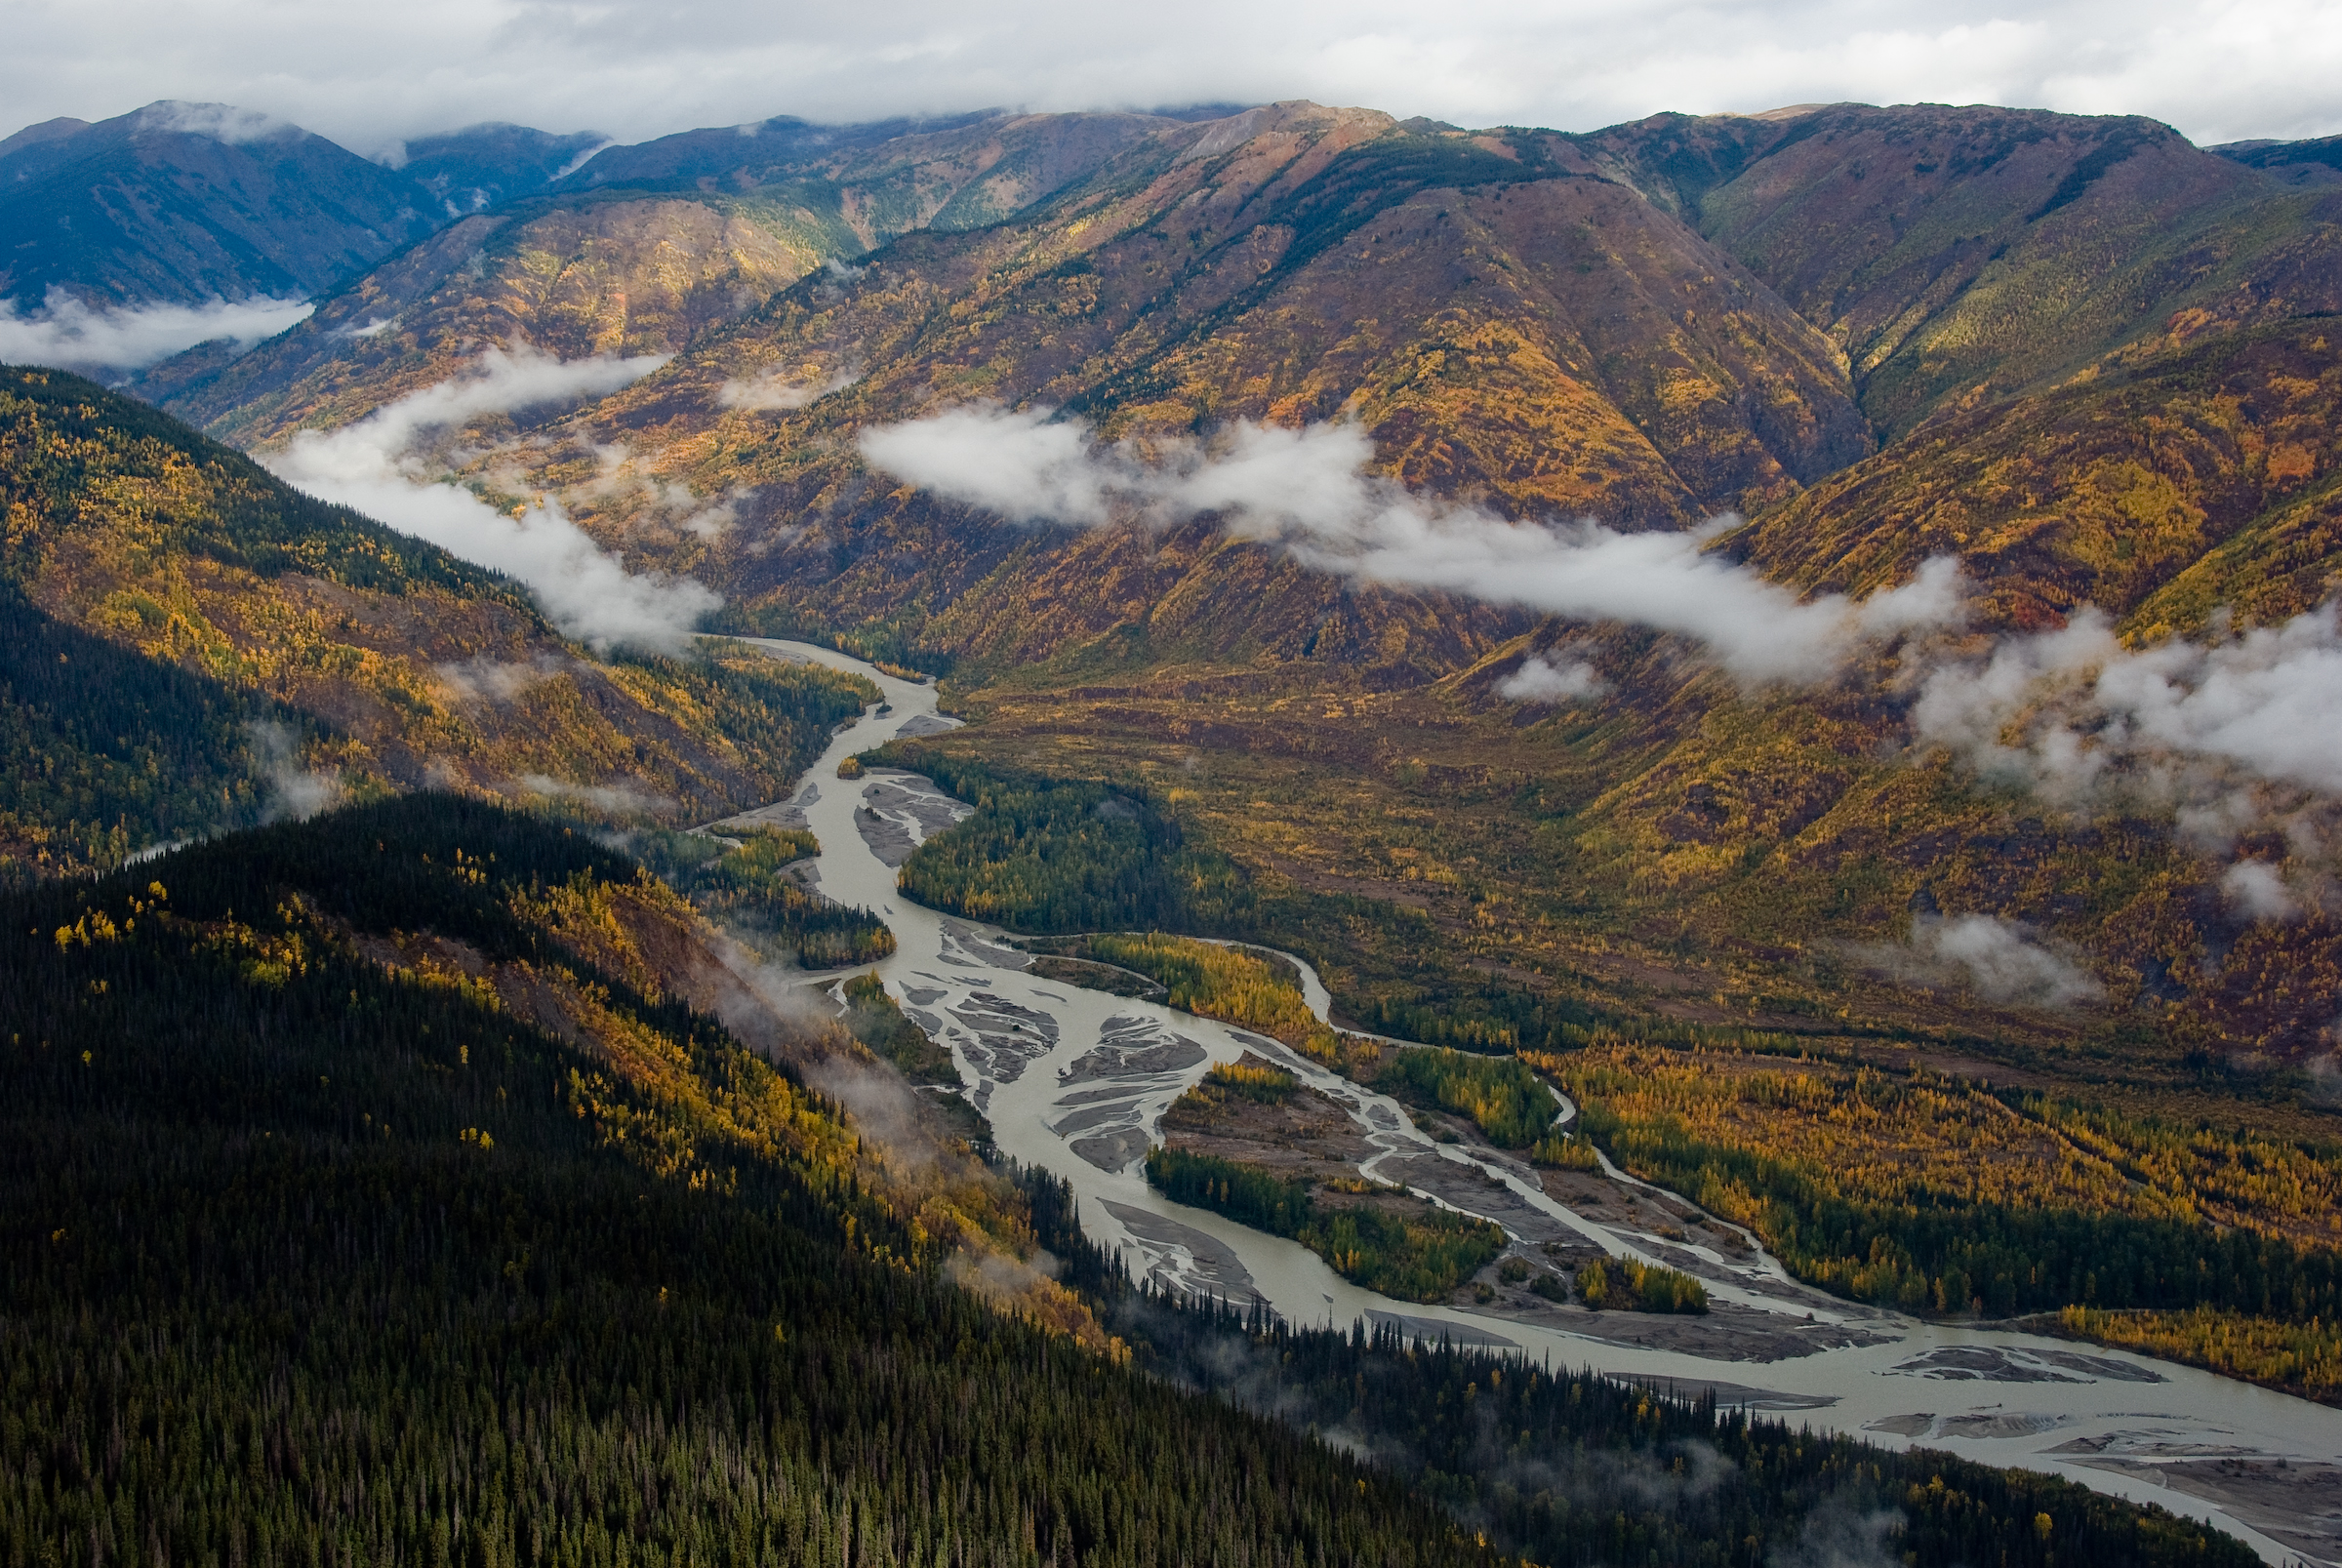 ID: river winds through lush autumn mountain valley